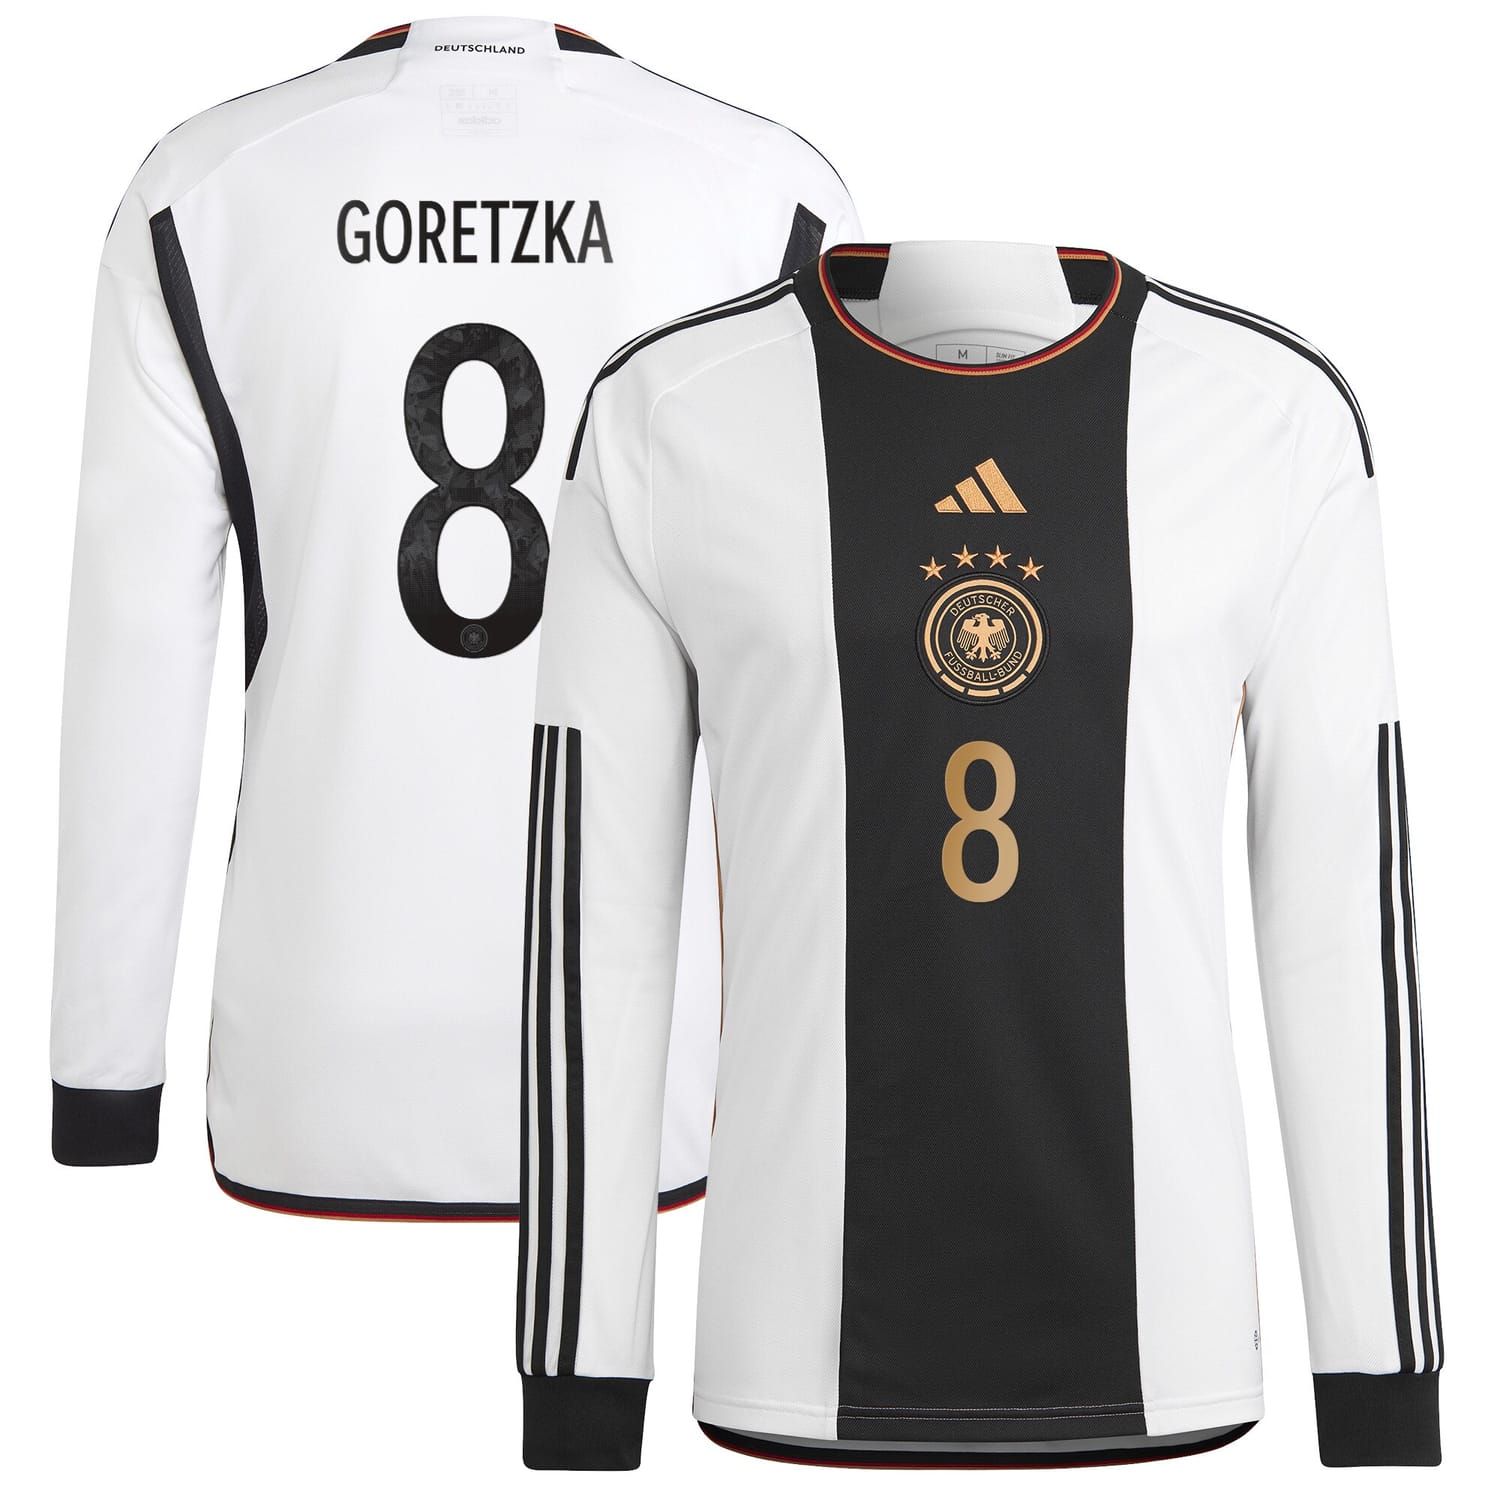 Germany National Team Home Jersey Shirt Long Sleeve player Leon Goretzka 8 printing for Men